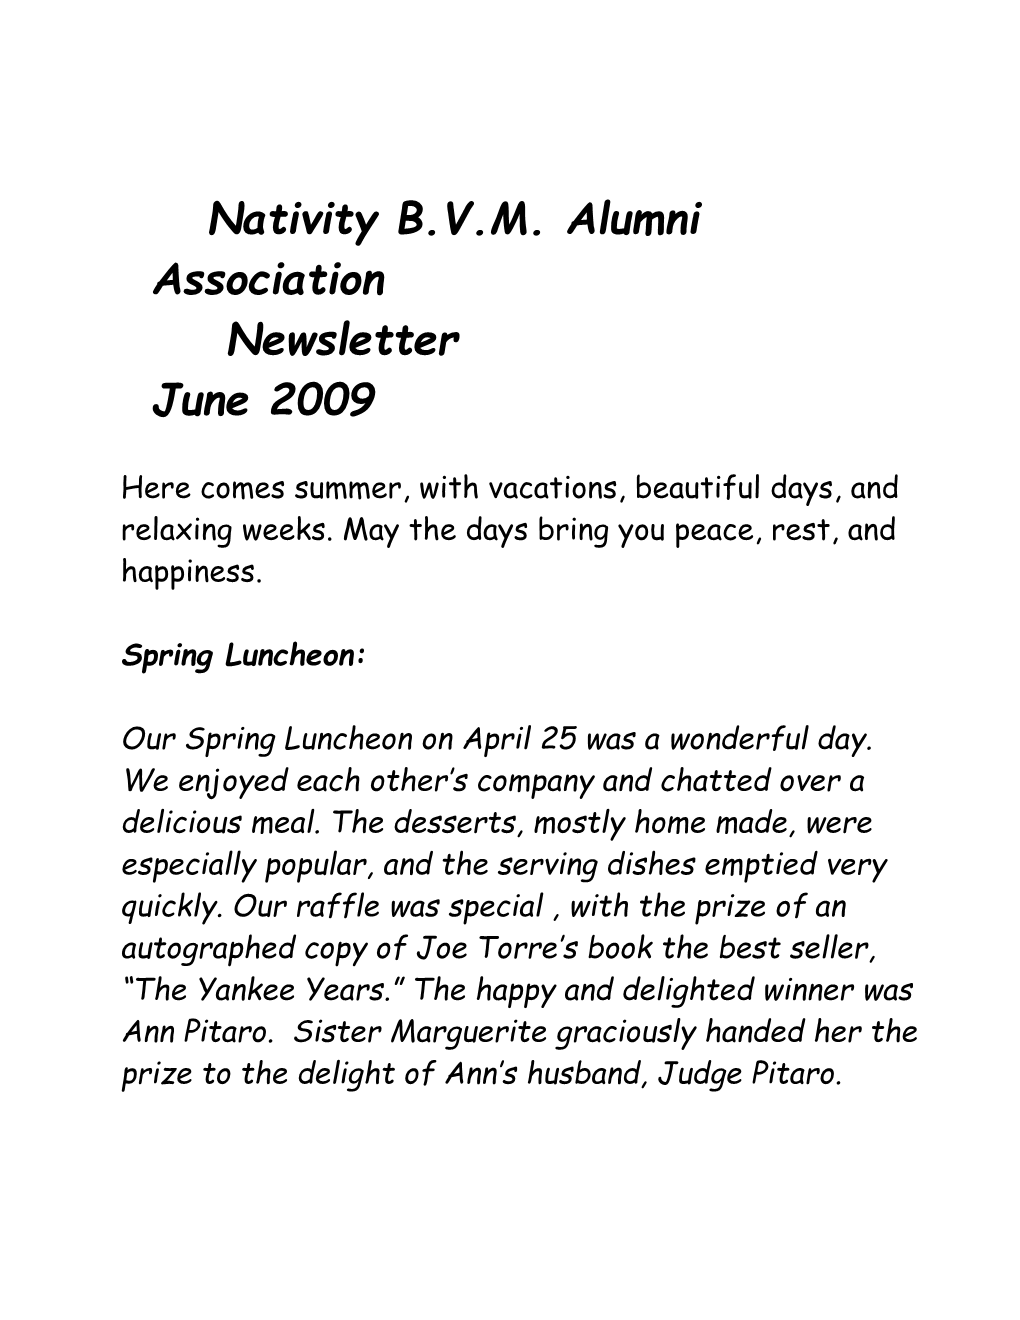 Nativity B.V.M. Alumni Association